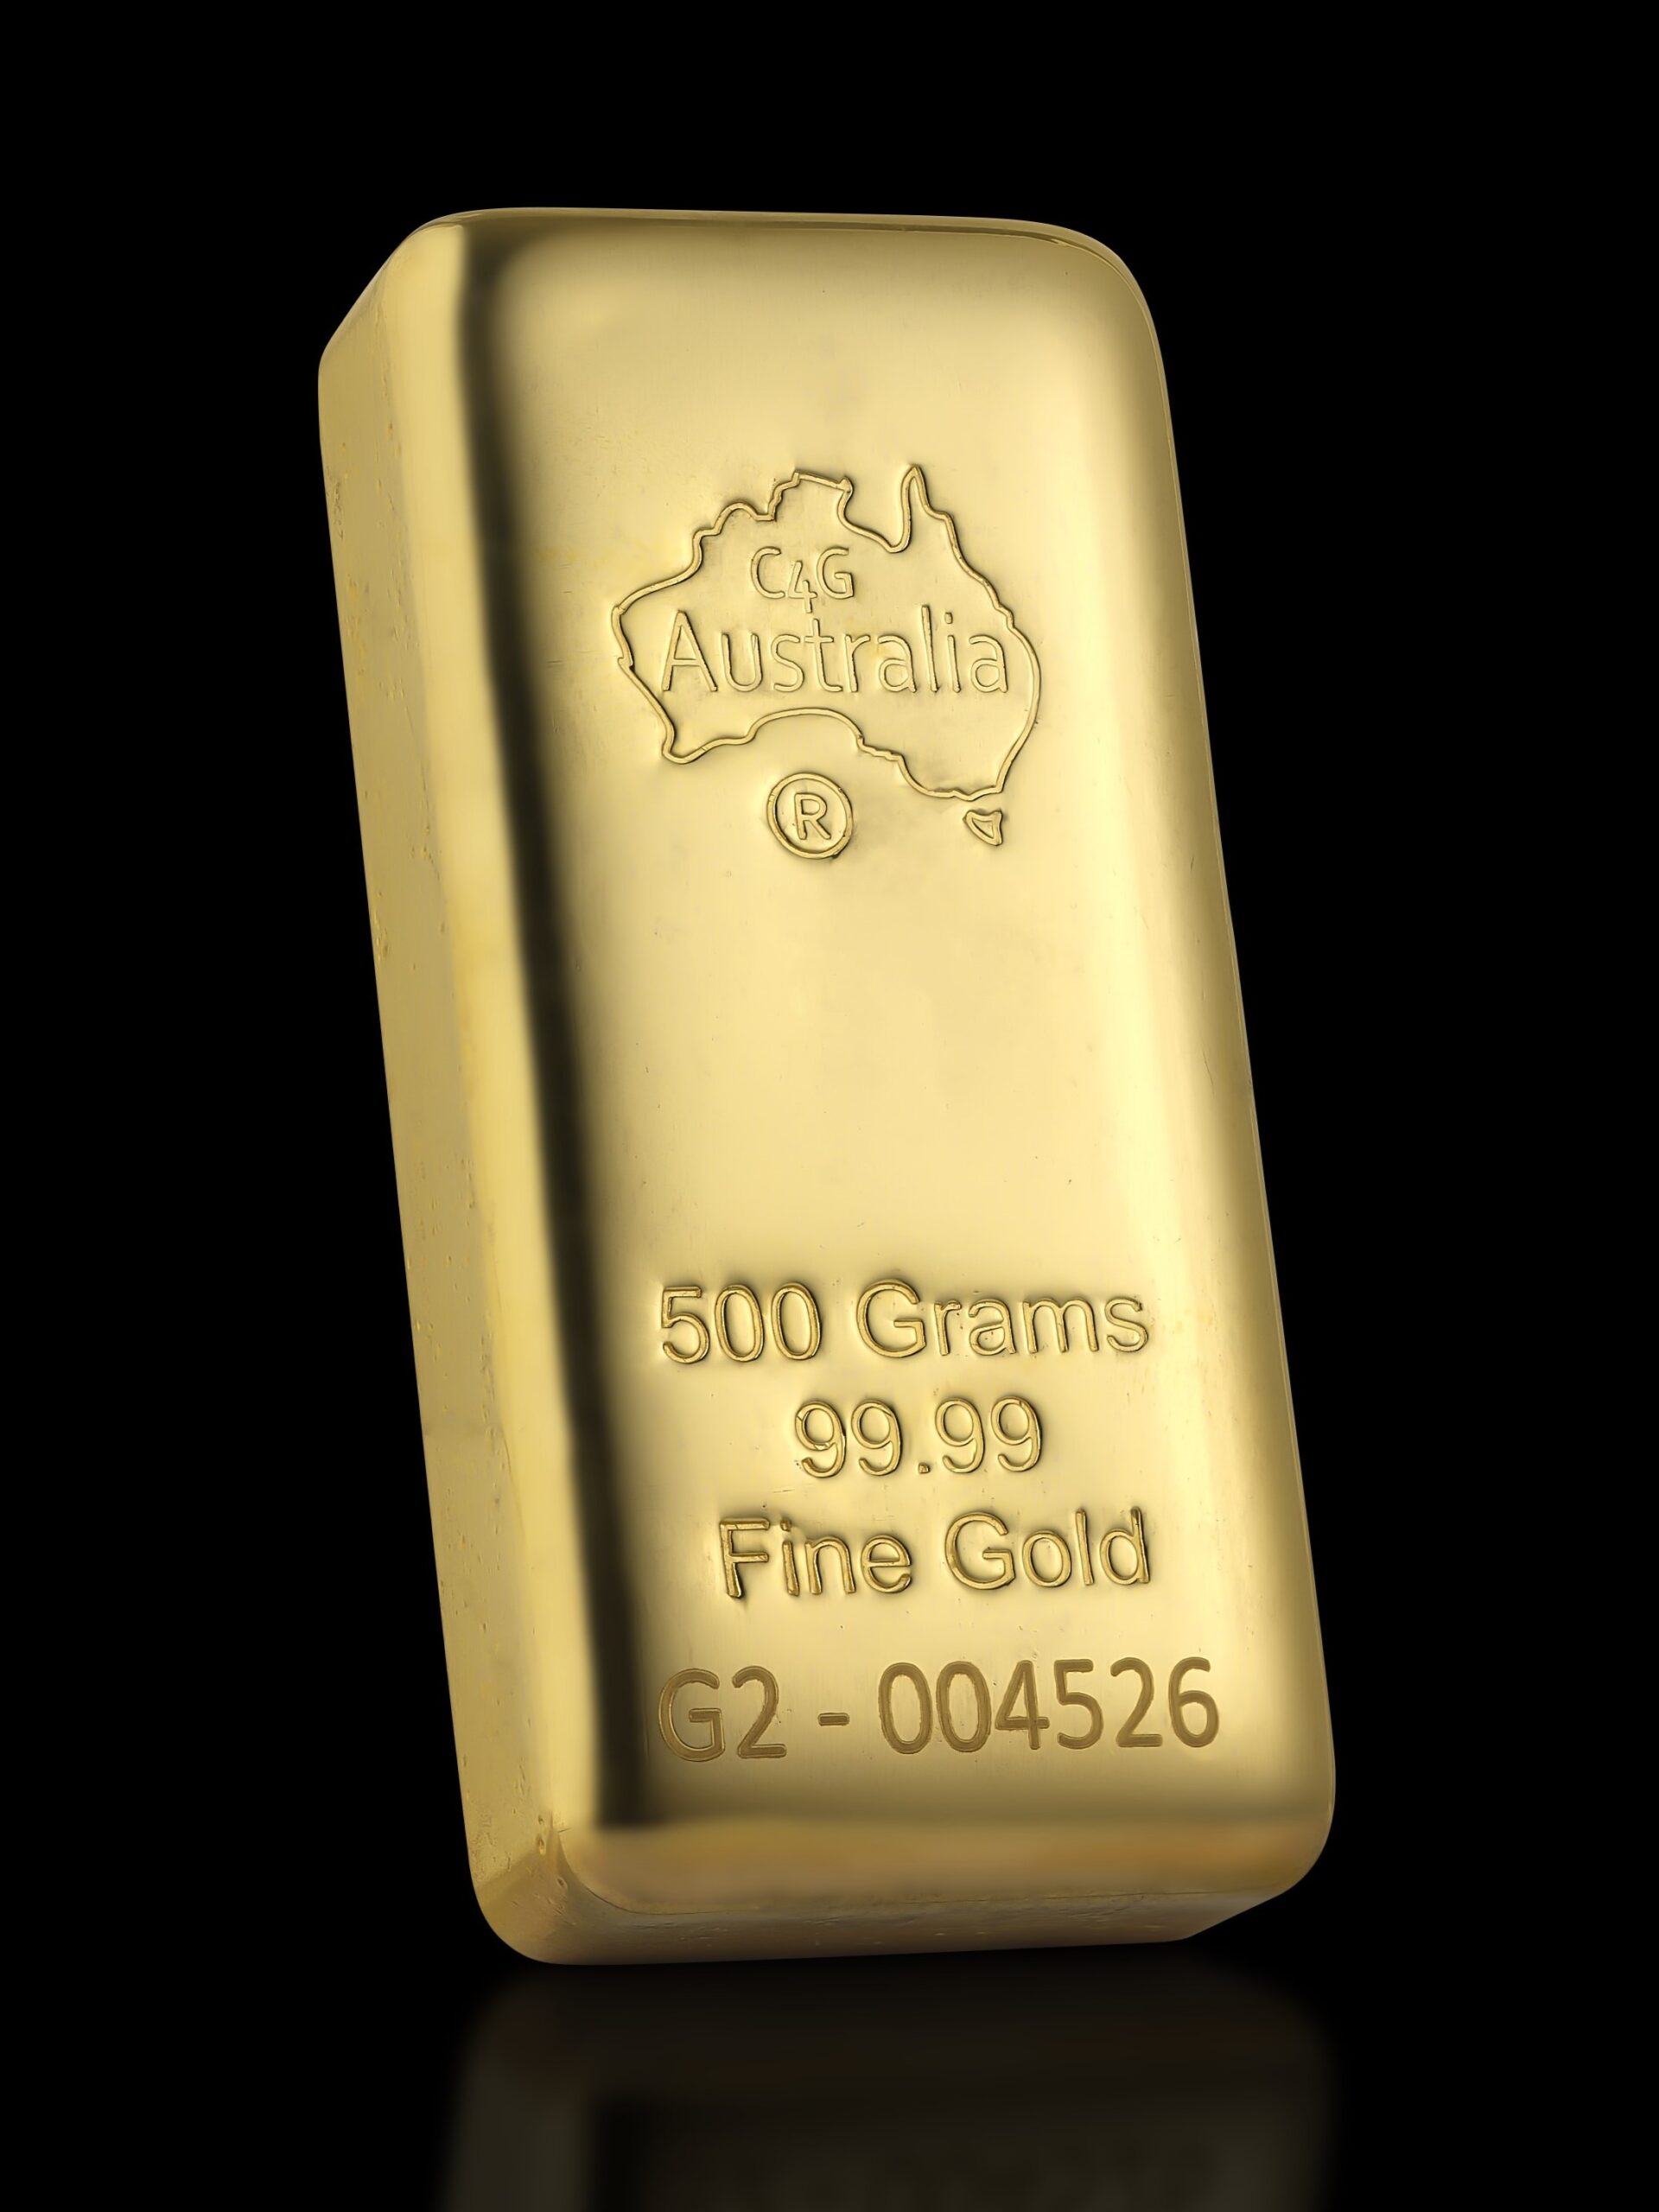 500 g C4G Cast Gold Bullion 99.99% Pure